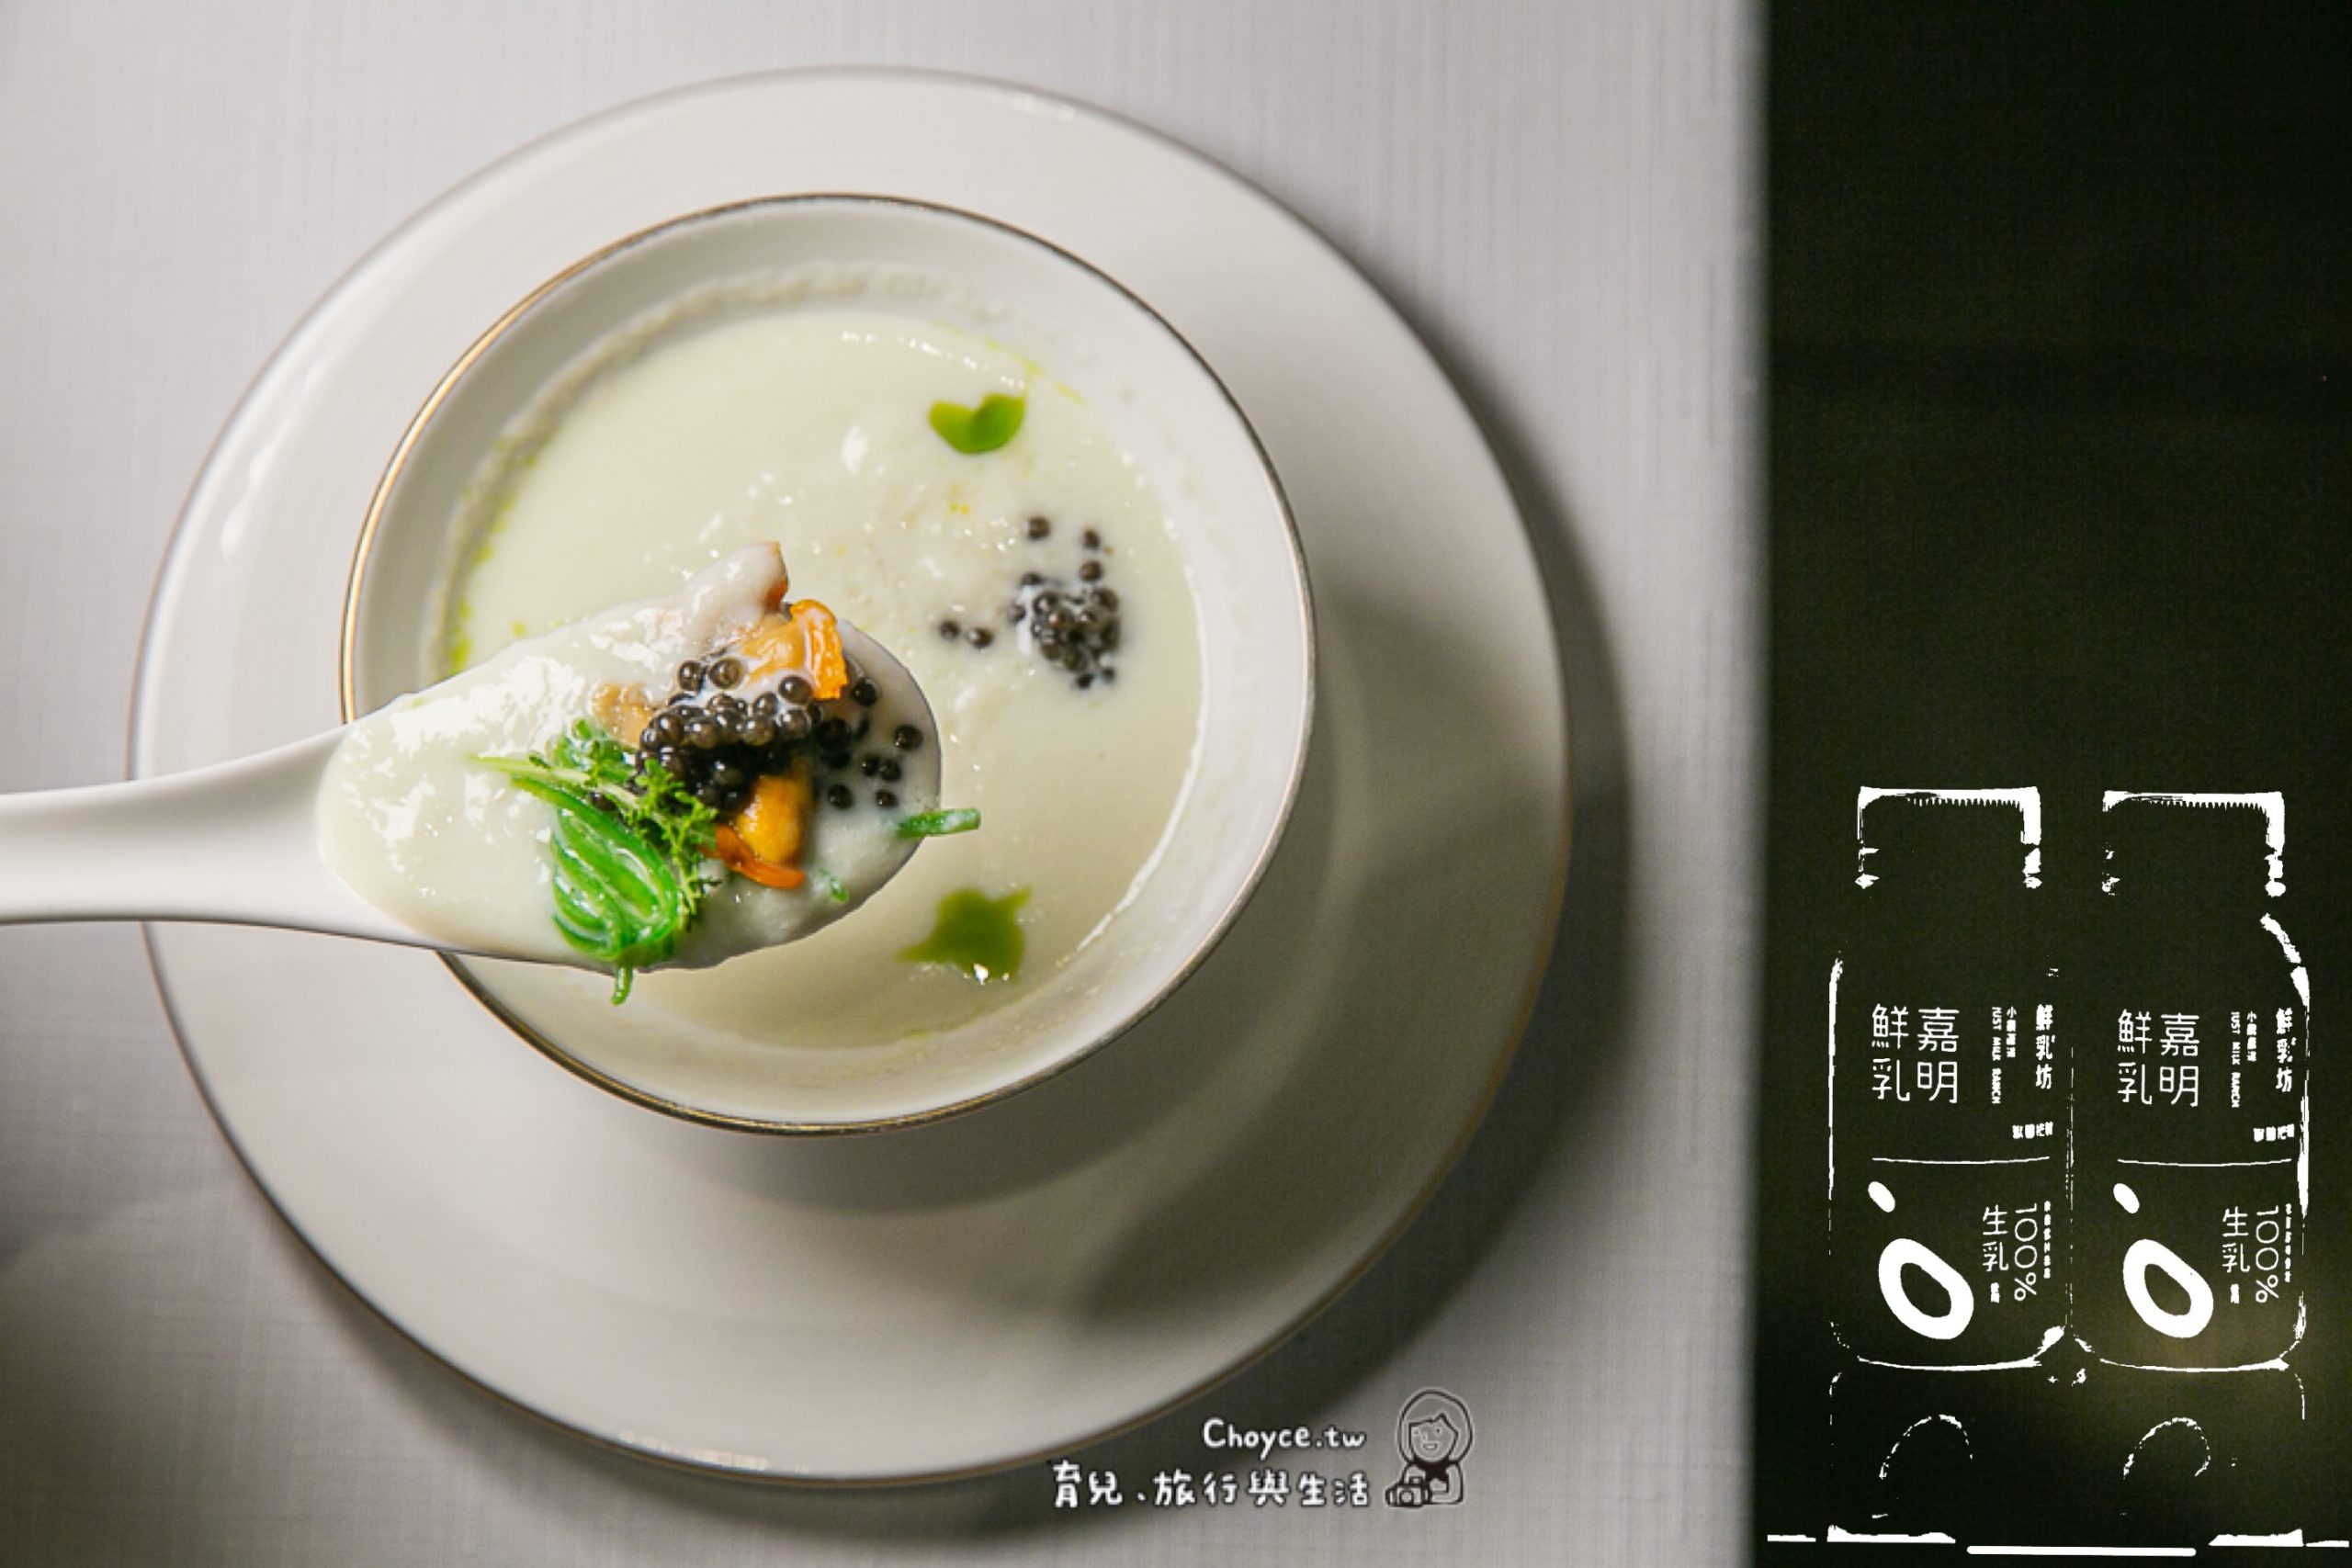 The Wang 米其林餐盤推薦 台中美食話題名店 嘉明鮮乳製作頂級奶油魚子醬濃湯